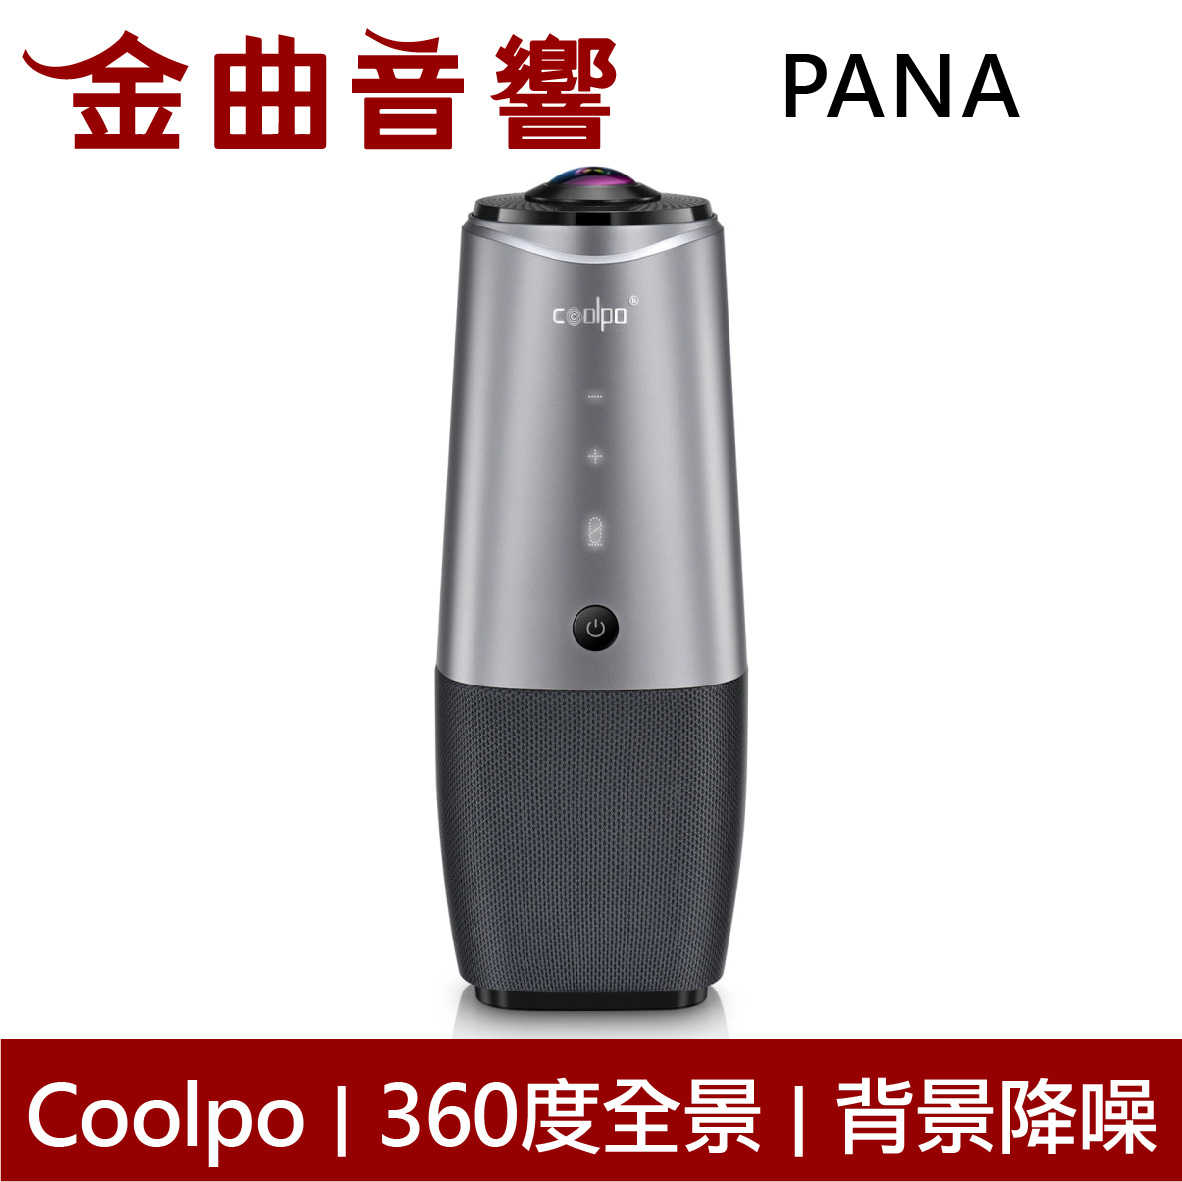 Coolpo PANA AI 360度全景 4K 消除噪音 網路視訊 會議 攝影機系統 | 金曲音響